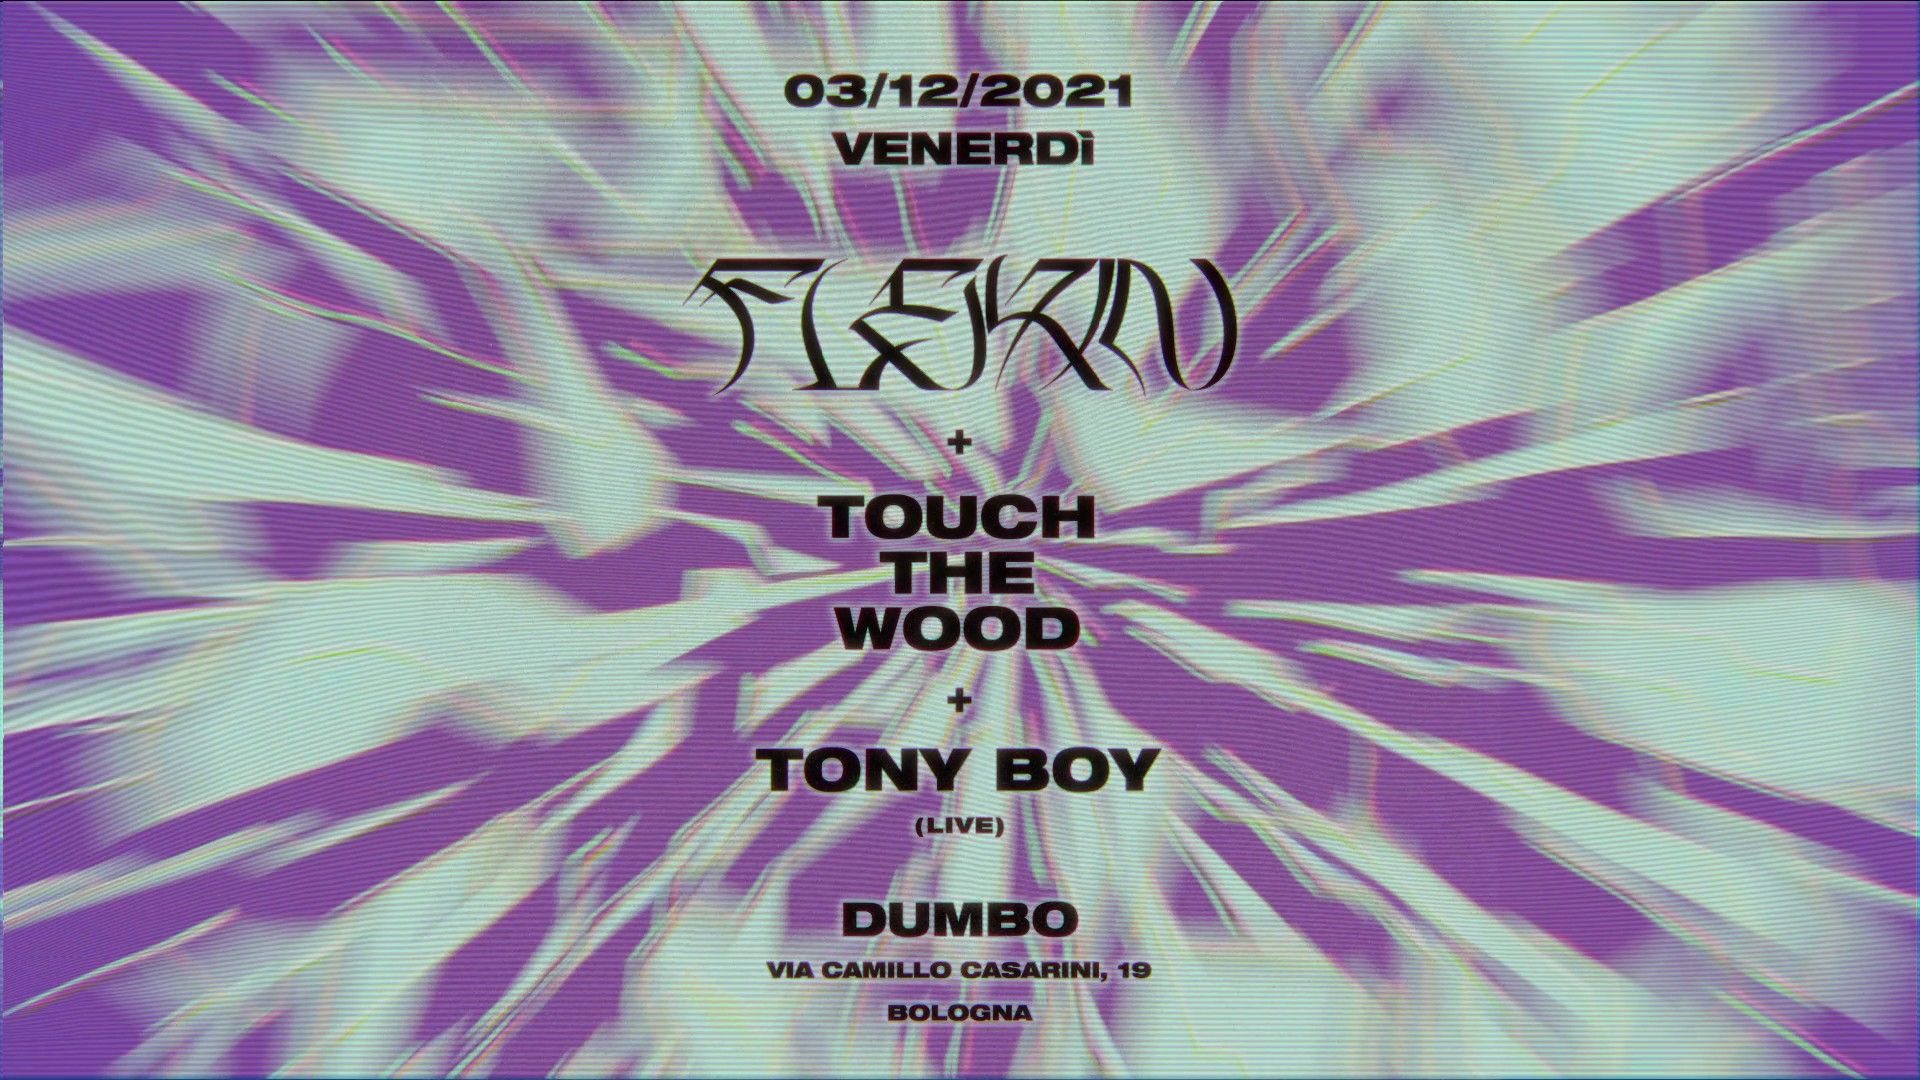 FLEXIN + TOUCH THE WOOD + TONYBOY (LIVE) 03/12/21